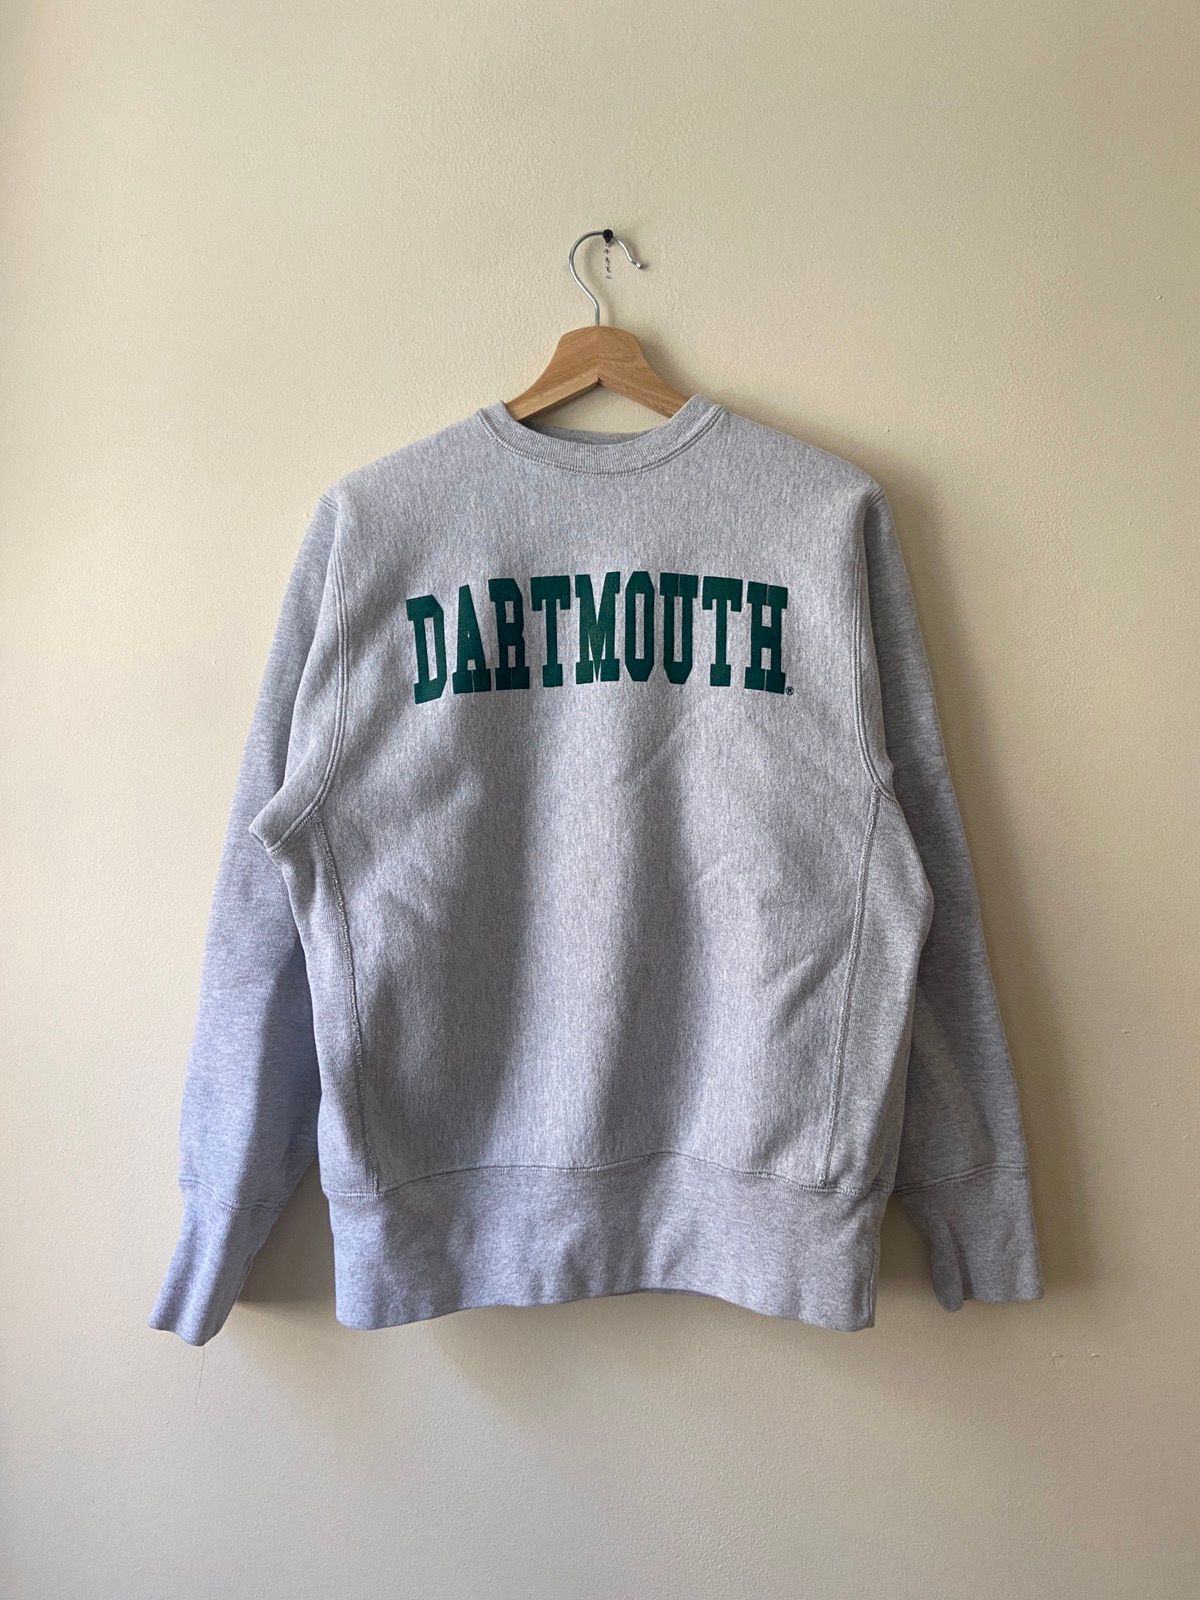 Vintage Vintage 90's Dartmouth College reverse weave grey